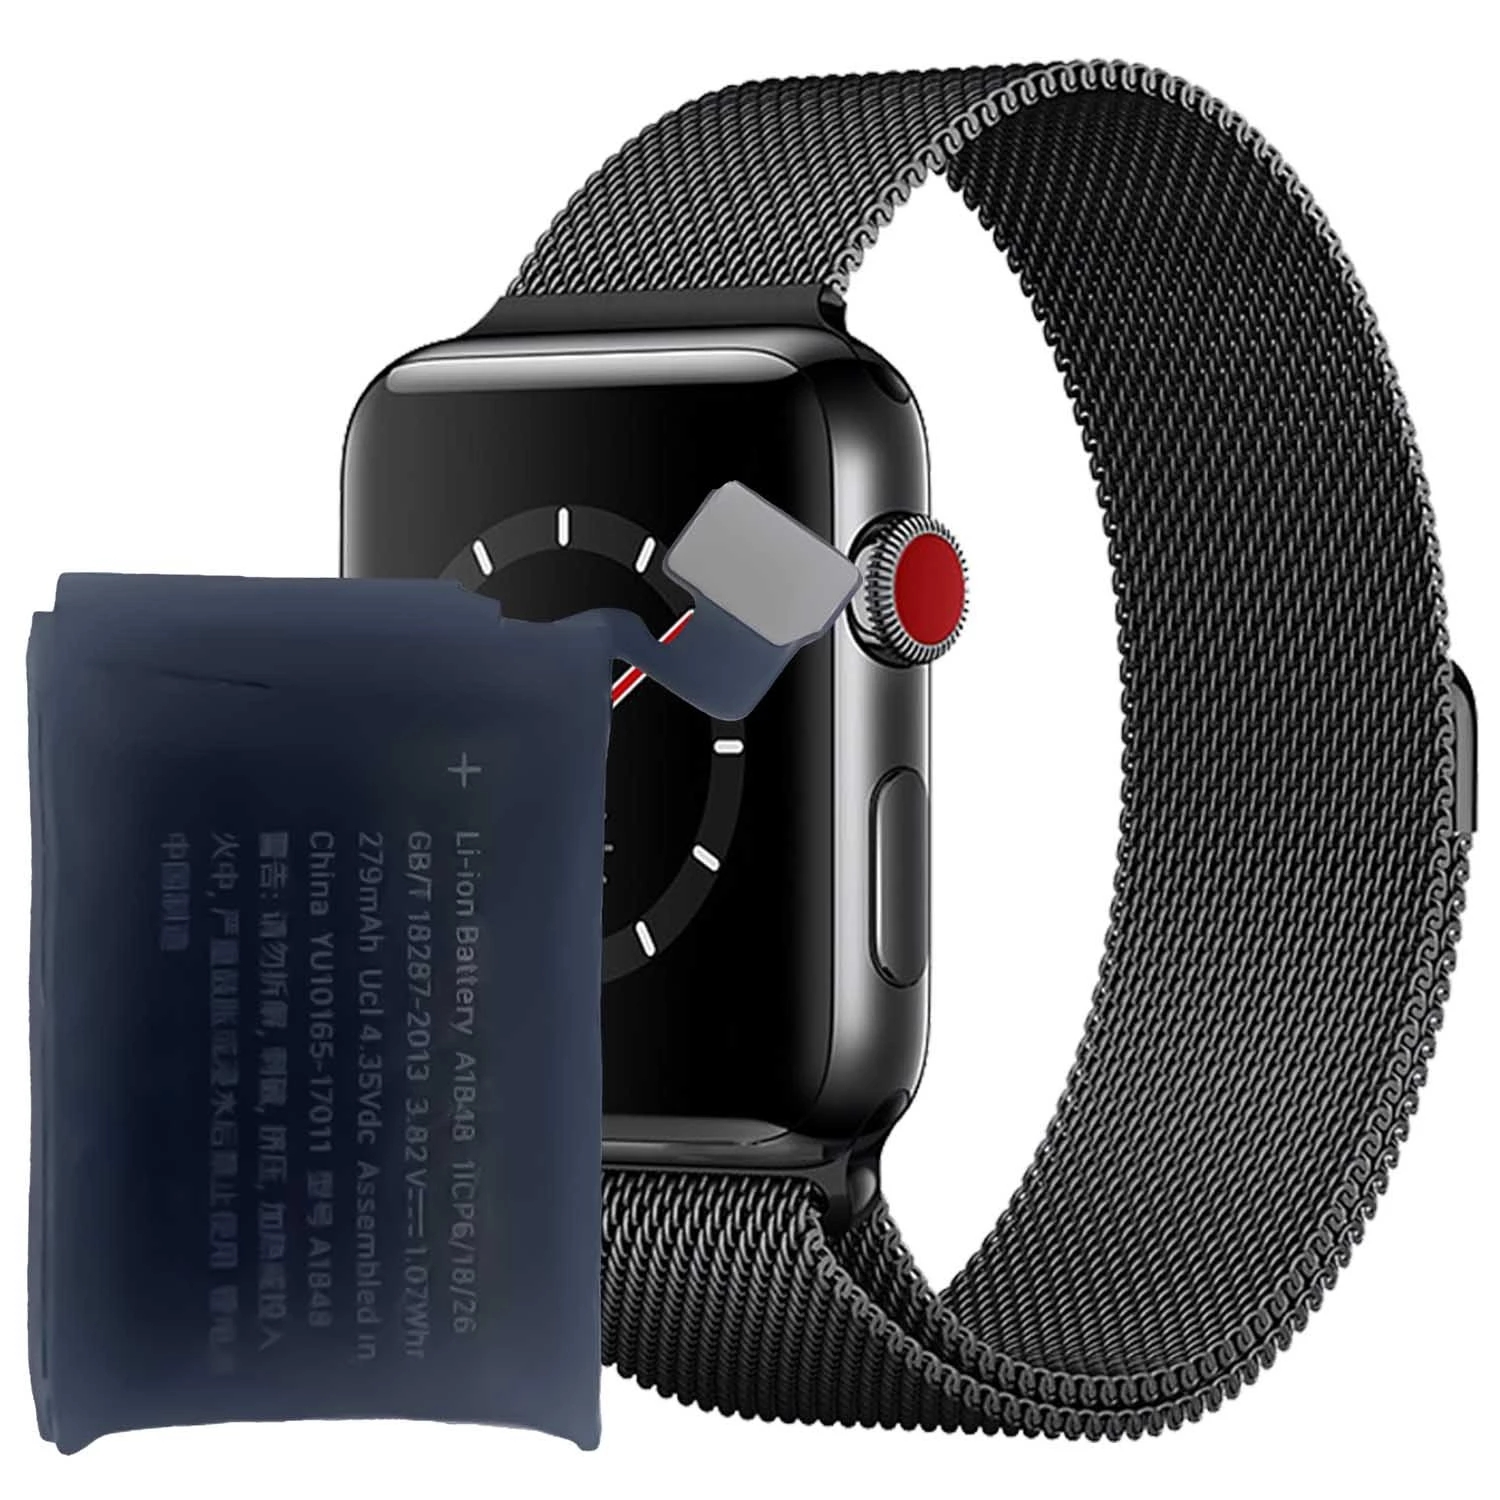 Apple Watch A1848 Battery